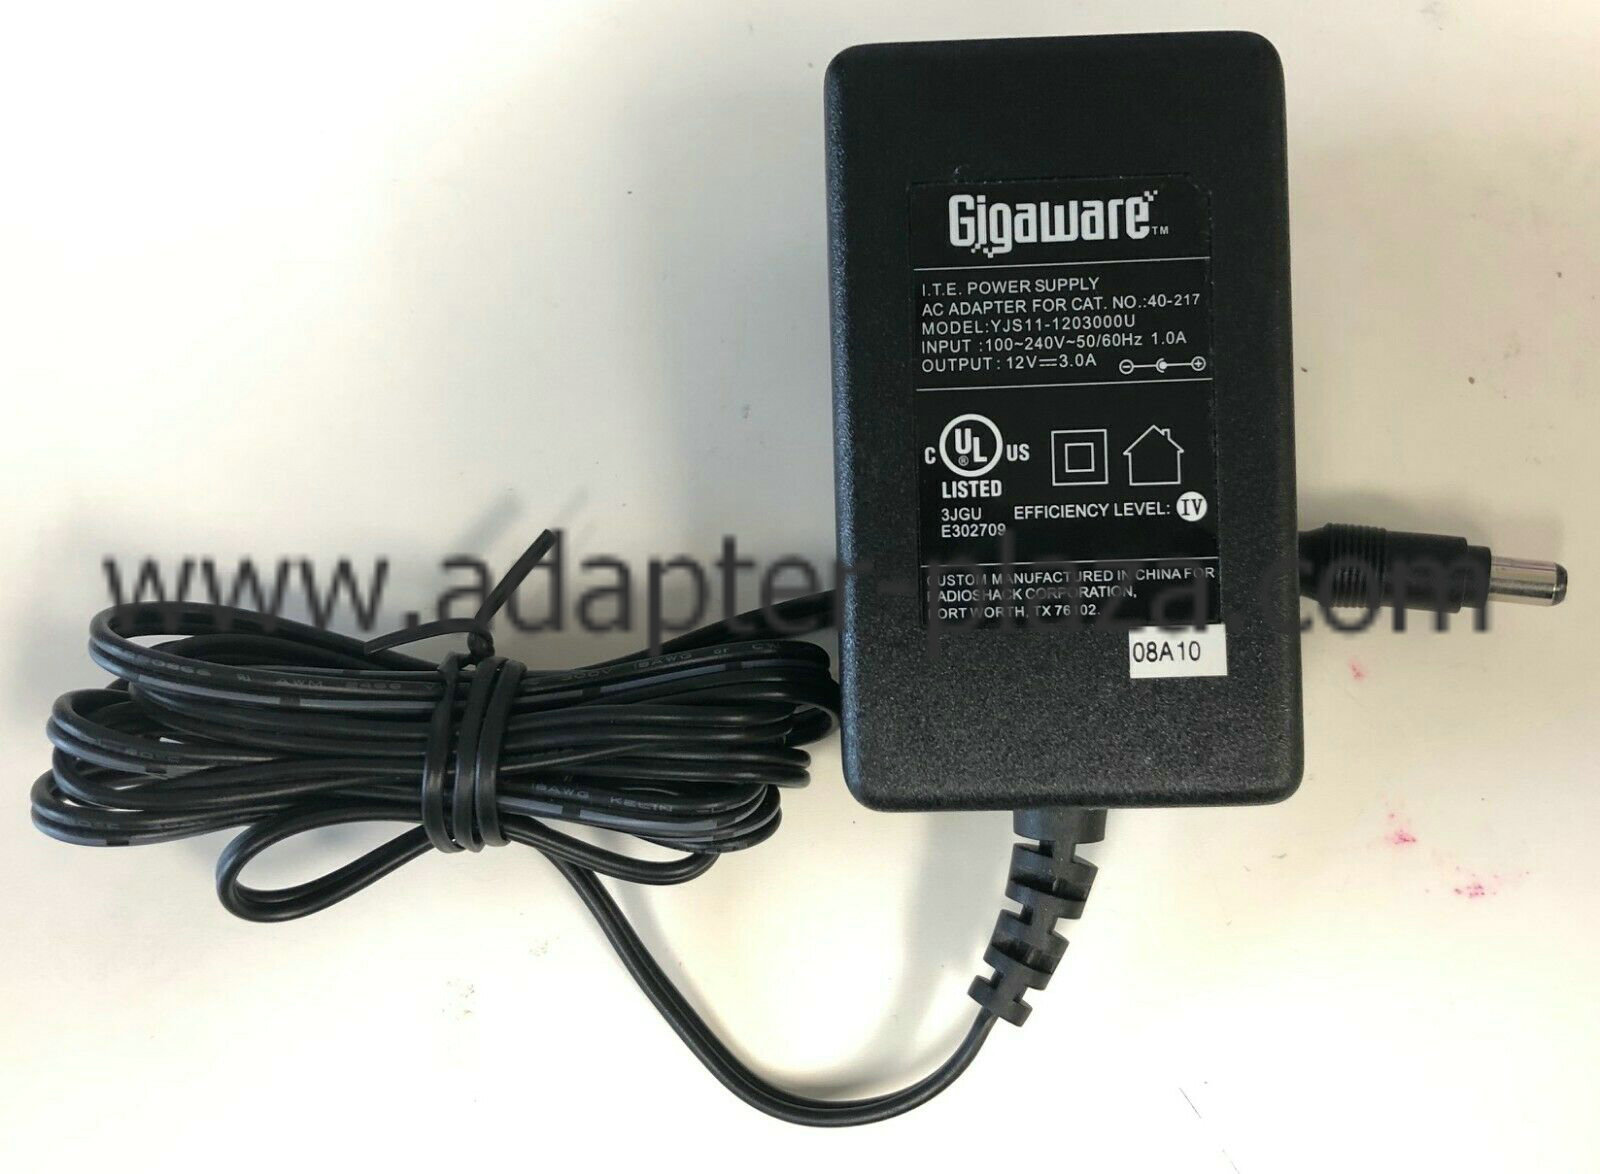 *Brand NEW* Gigaware YJS11-1203000U 40-217 12V 3.0A AC DC Adapter POWER SUPPLY